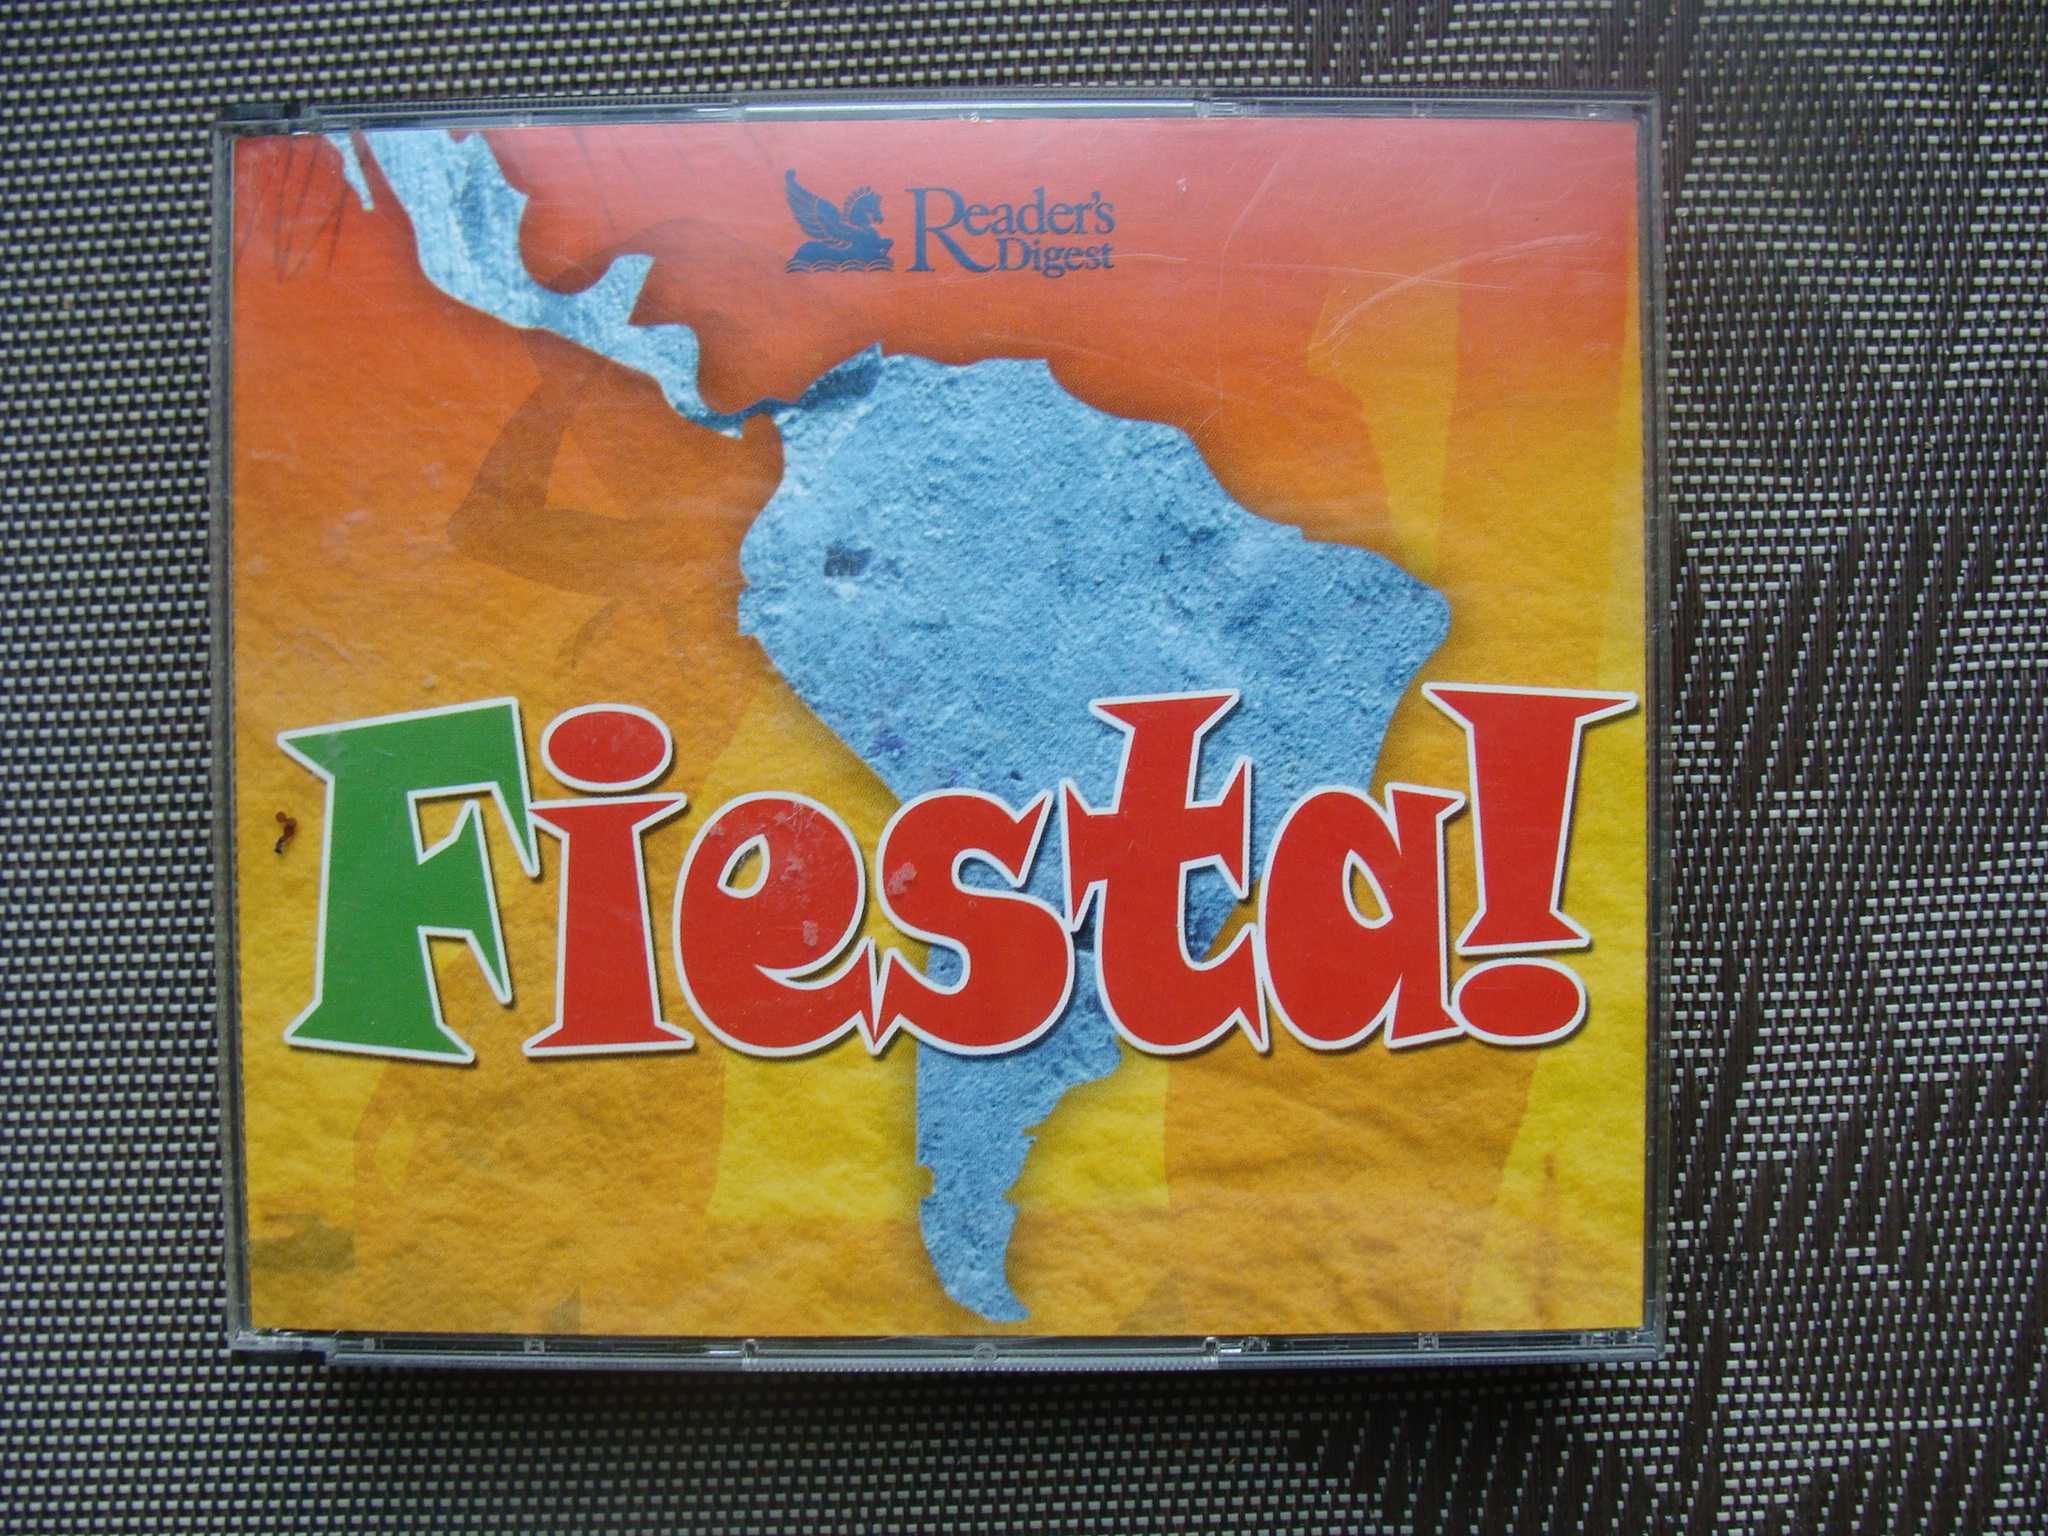 Zestaw płyt 5 CD "Fiesta" Reader's Digest (M)